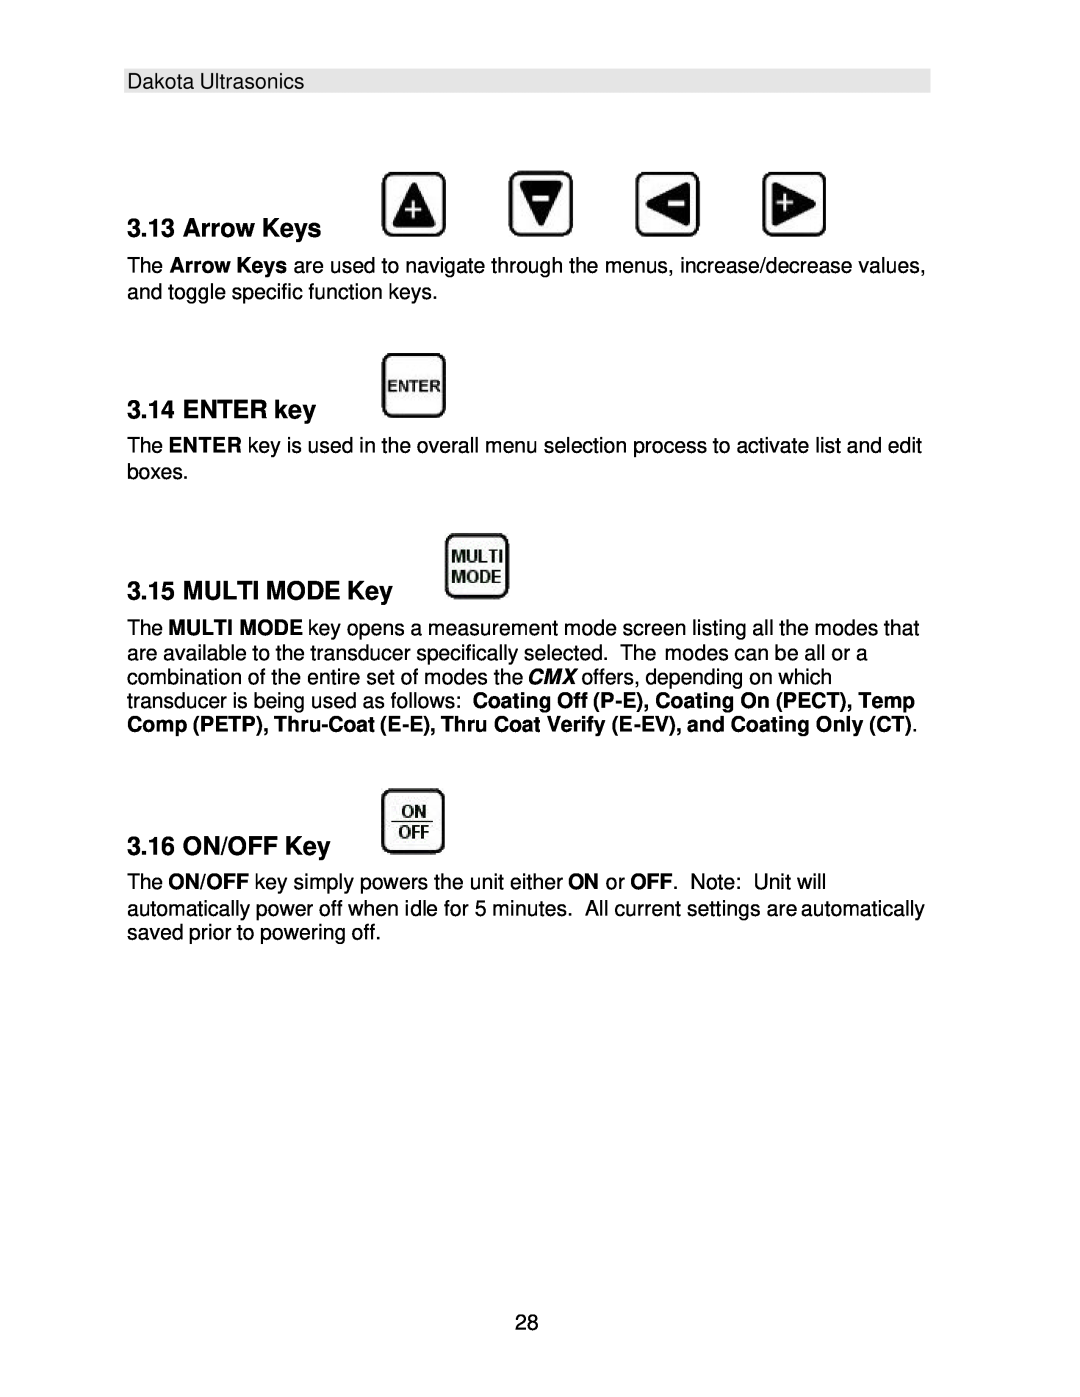 Dakota Digital CMX operation manual Arrow Keys, ENTER key, MULTI MODE Key, 3.16 ON/OFF Key 